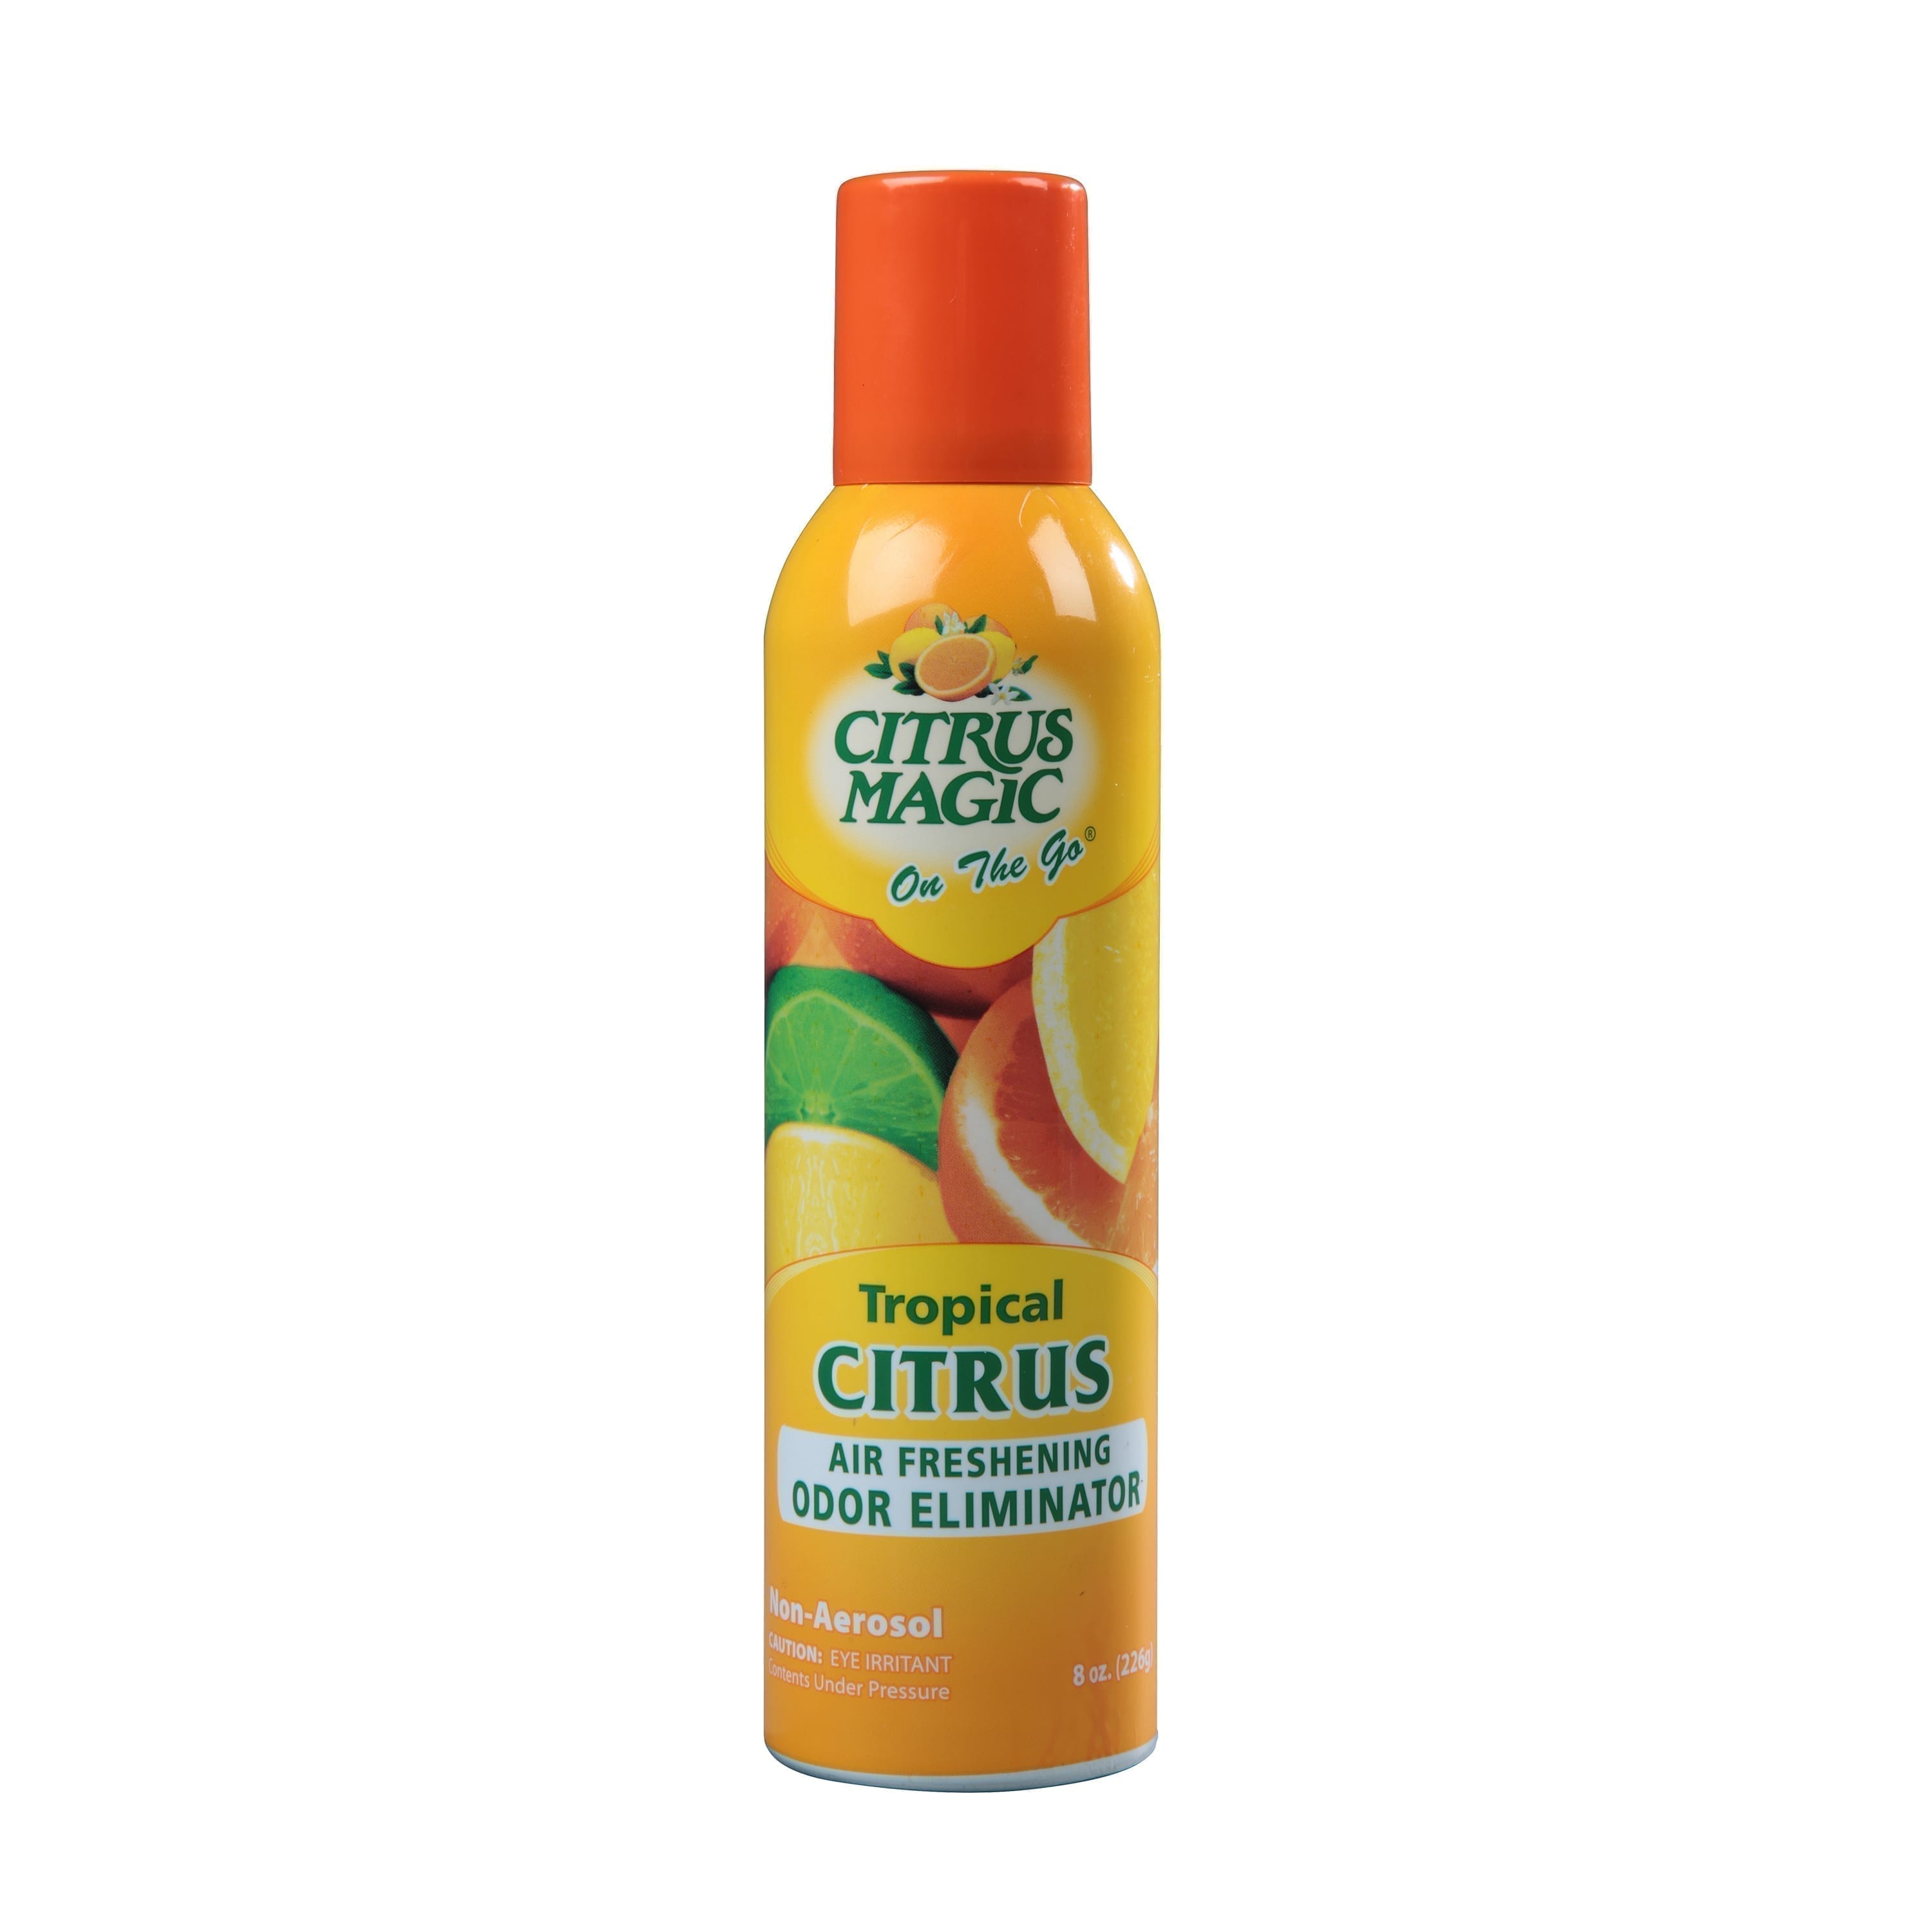 Citrus Magic On The Go Odor Eliminating Air Freshener Spray, Tropical Citrus Blend